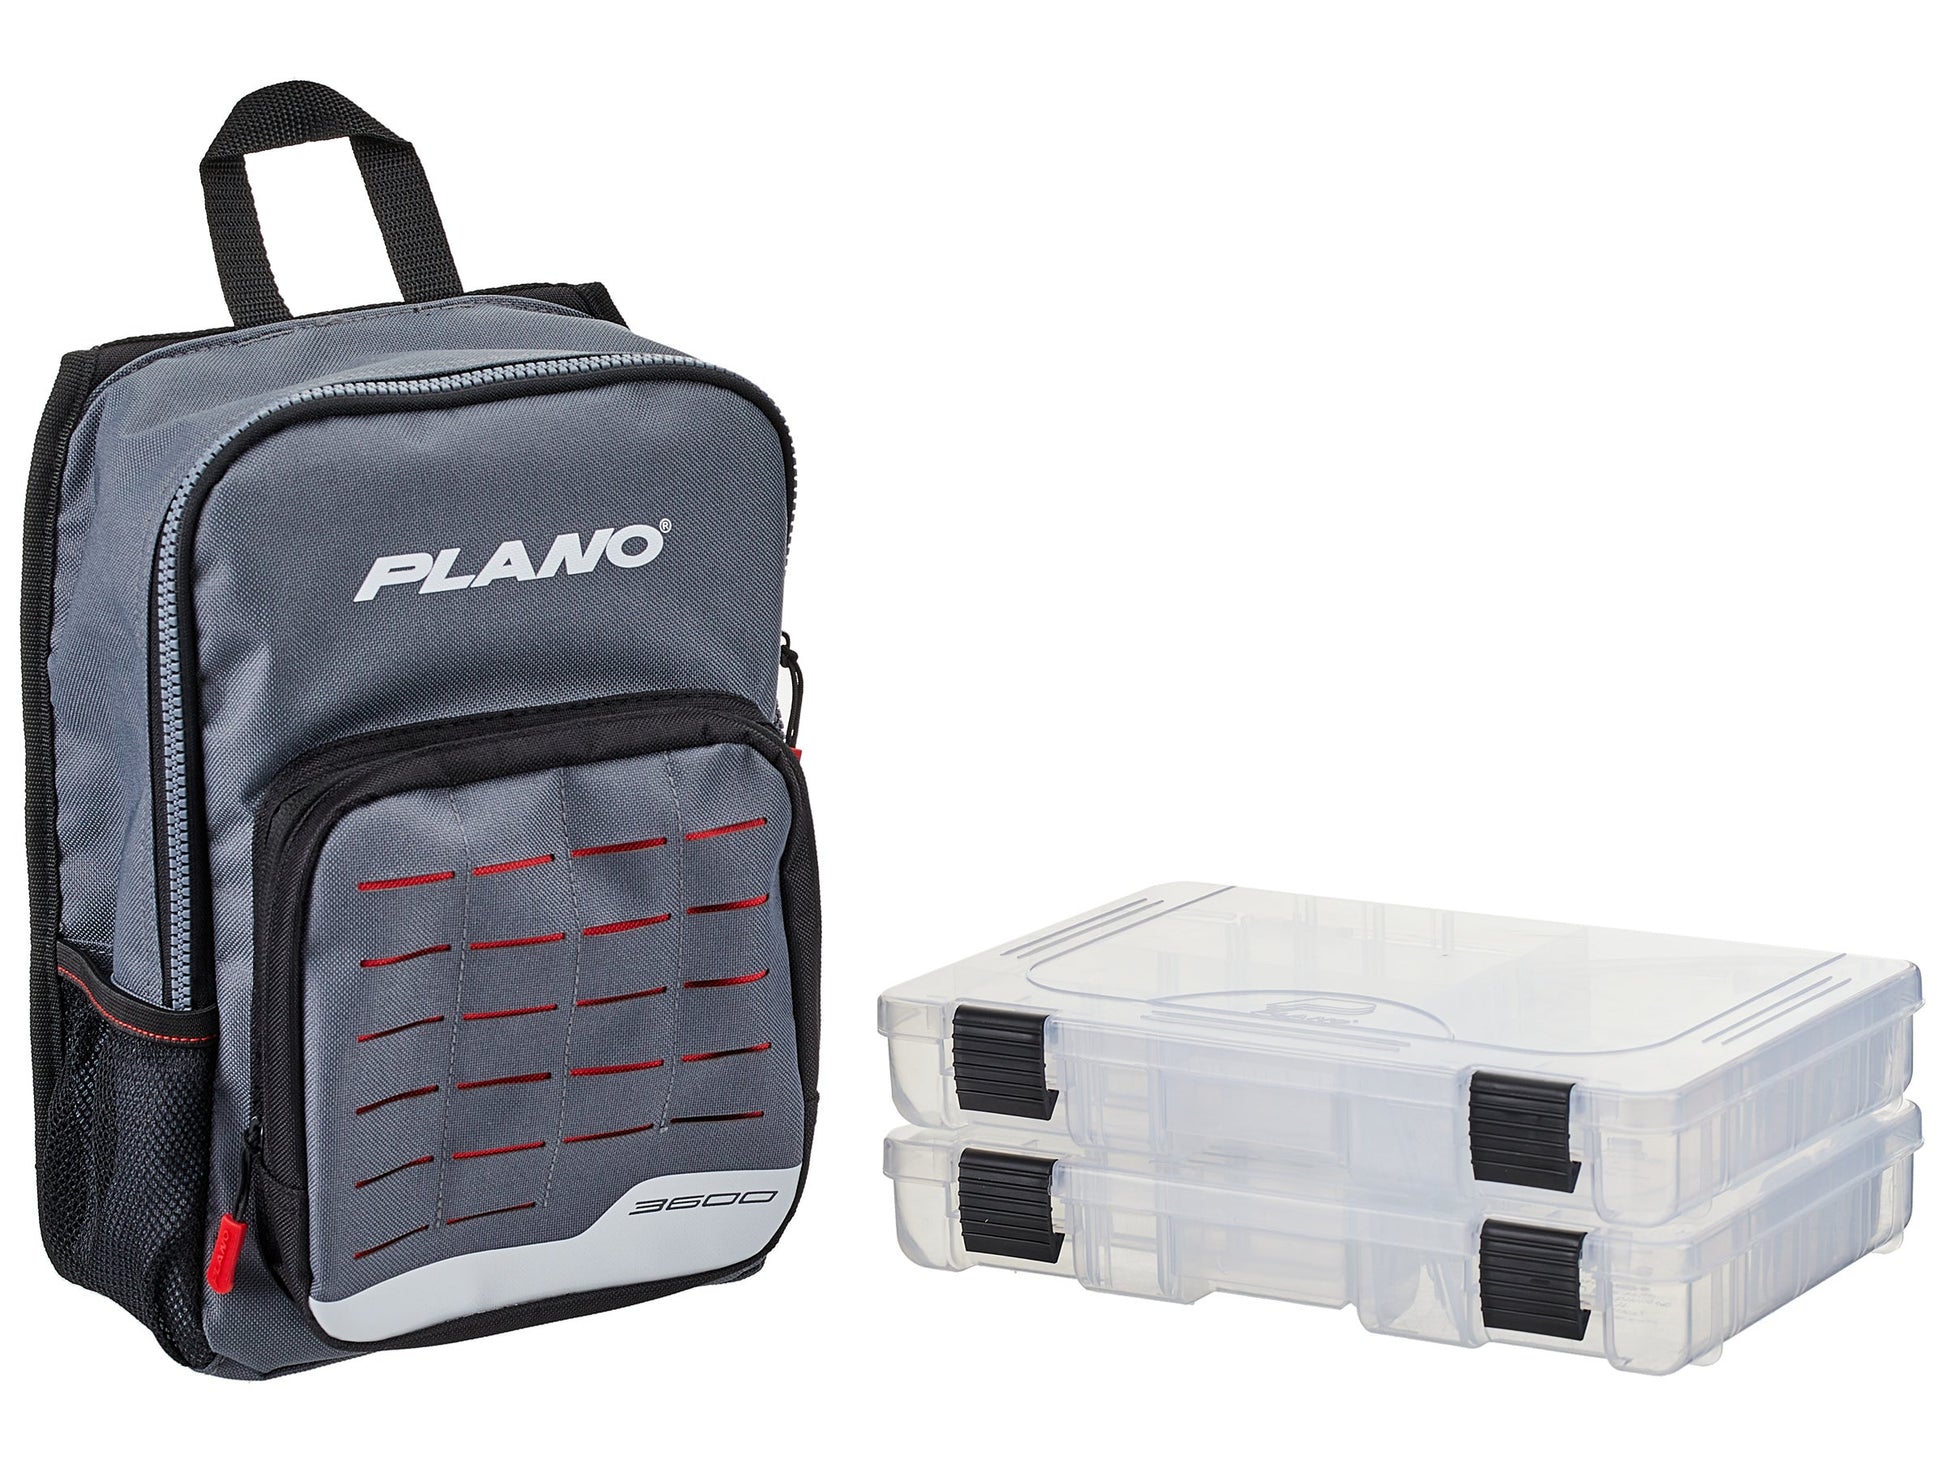  Plano Weekend Series 3600 Tackle Sling Pack, Gray